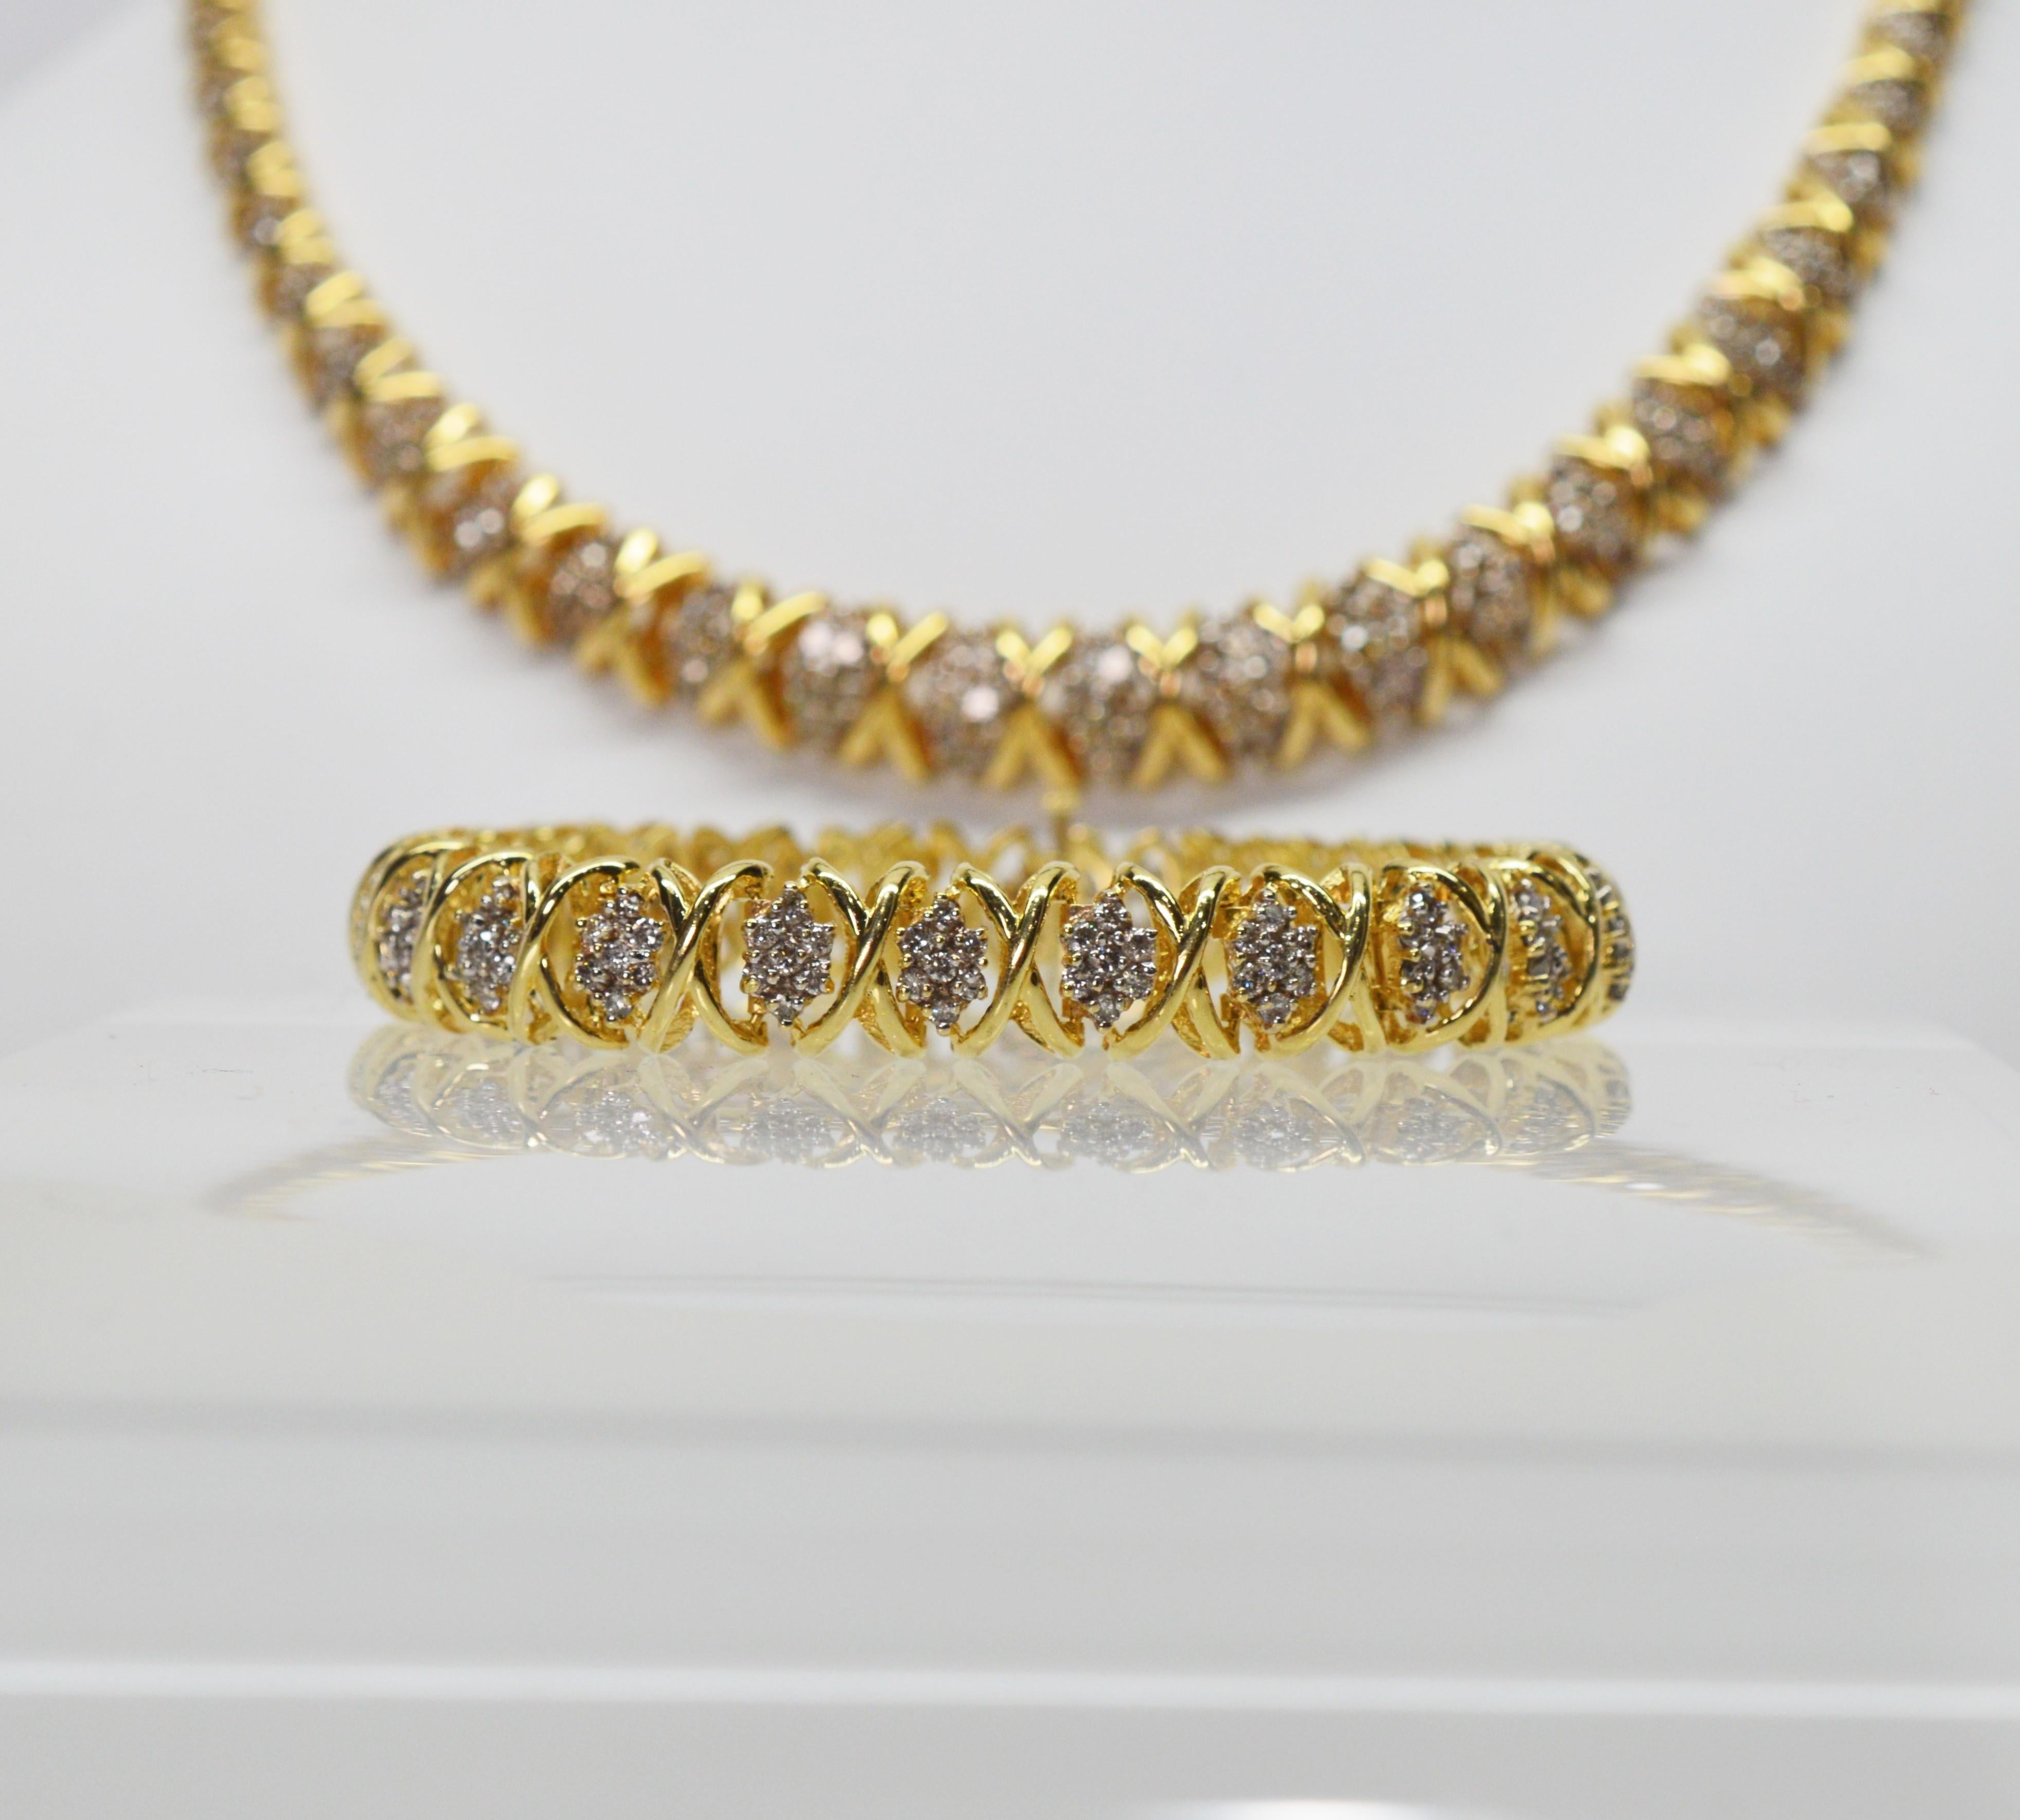 14 karat gold necklace set